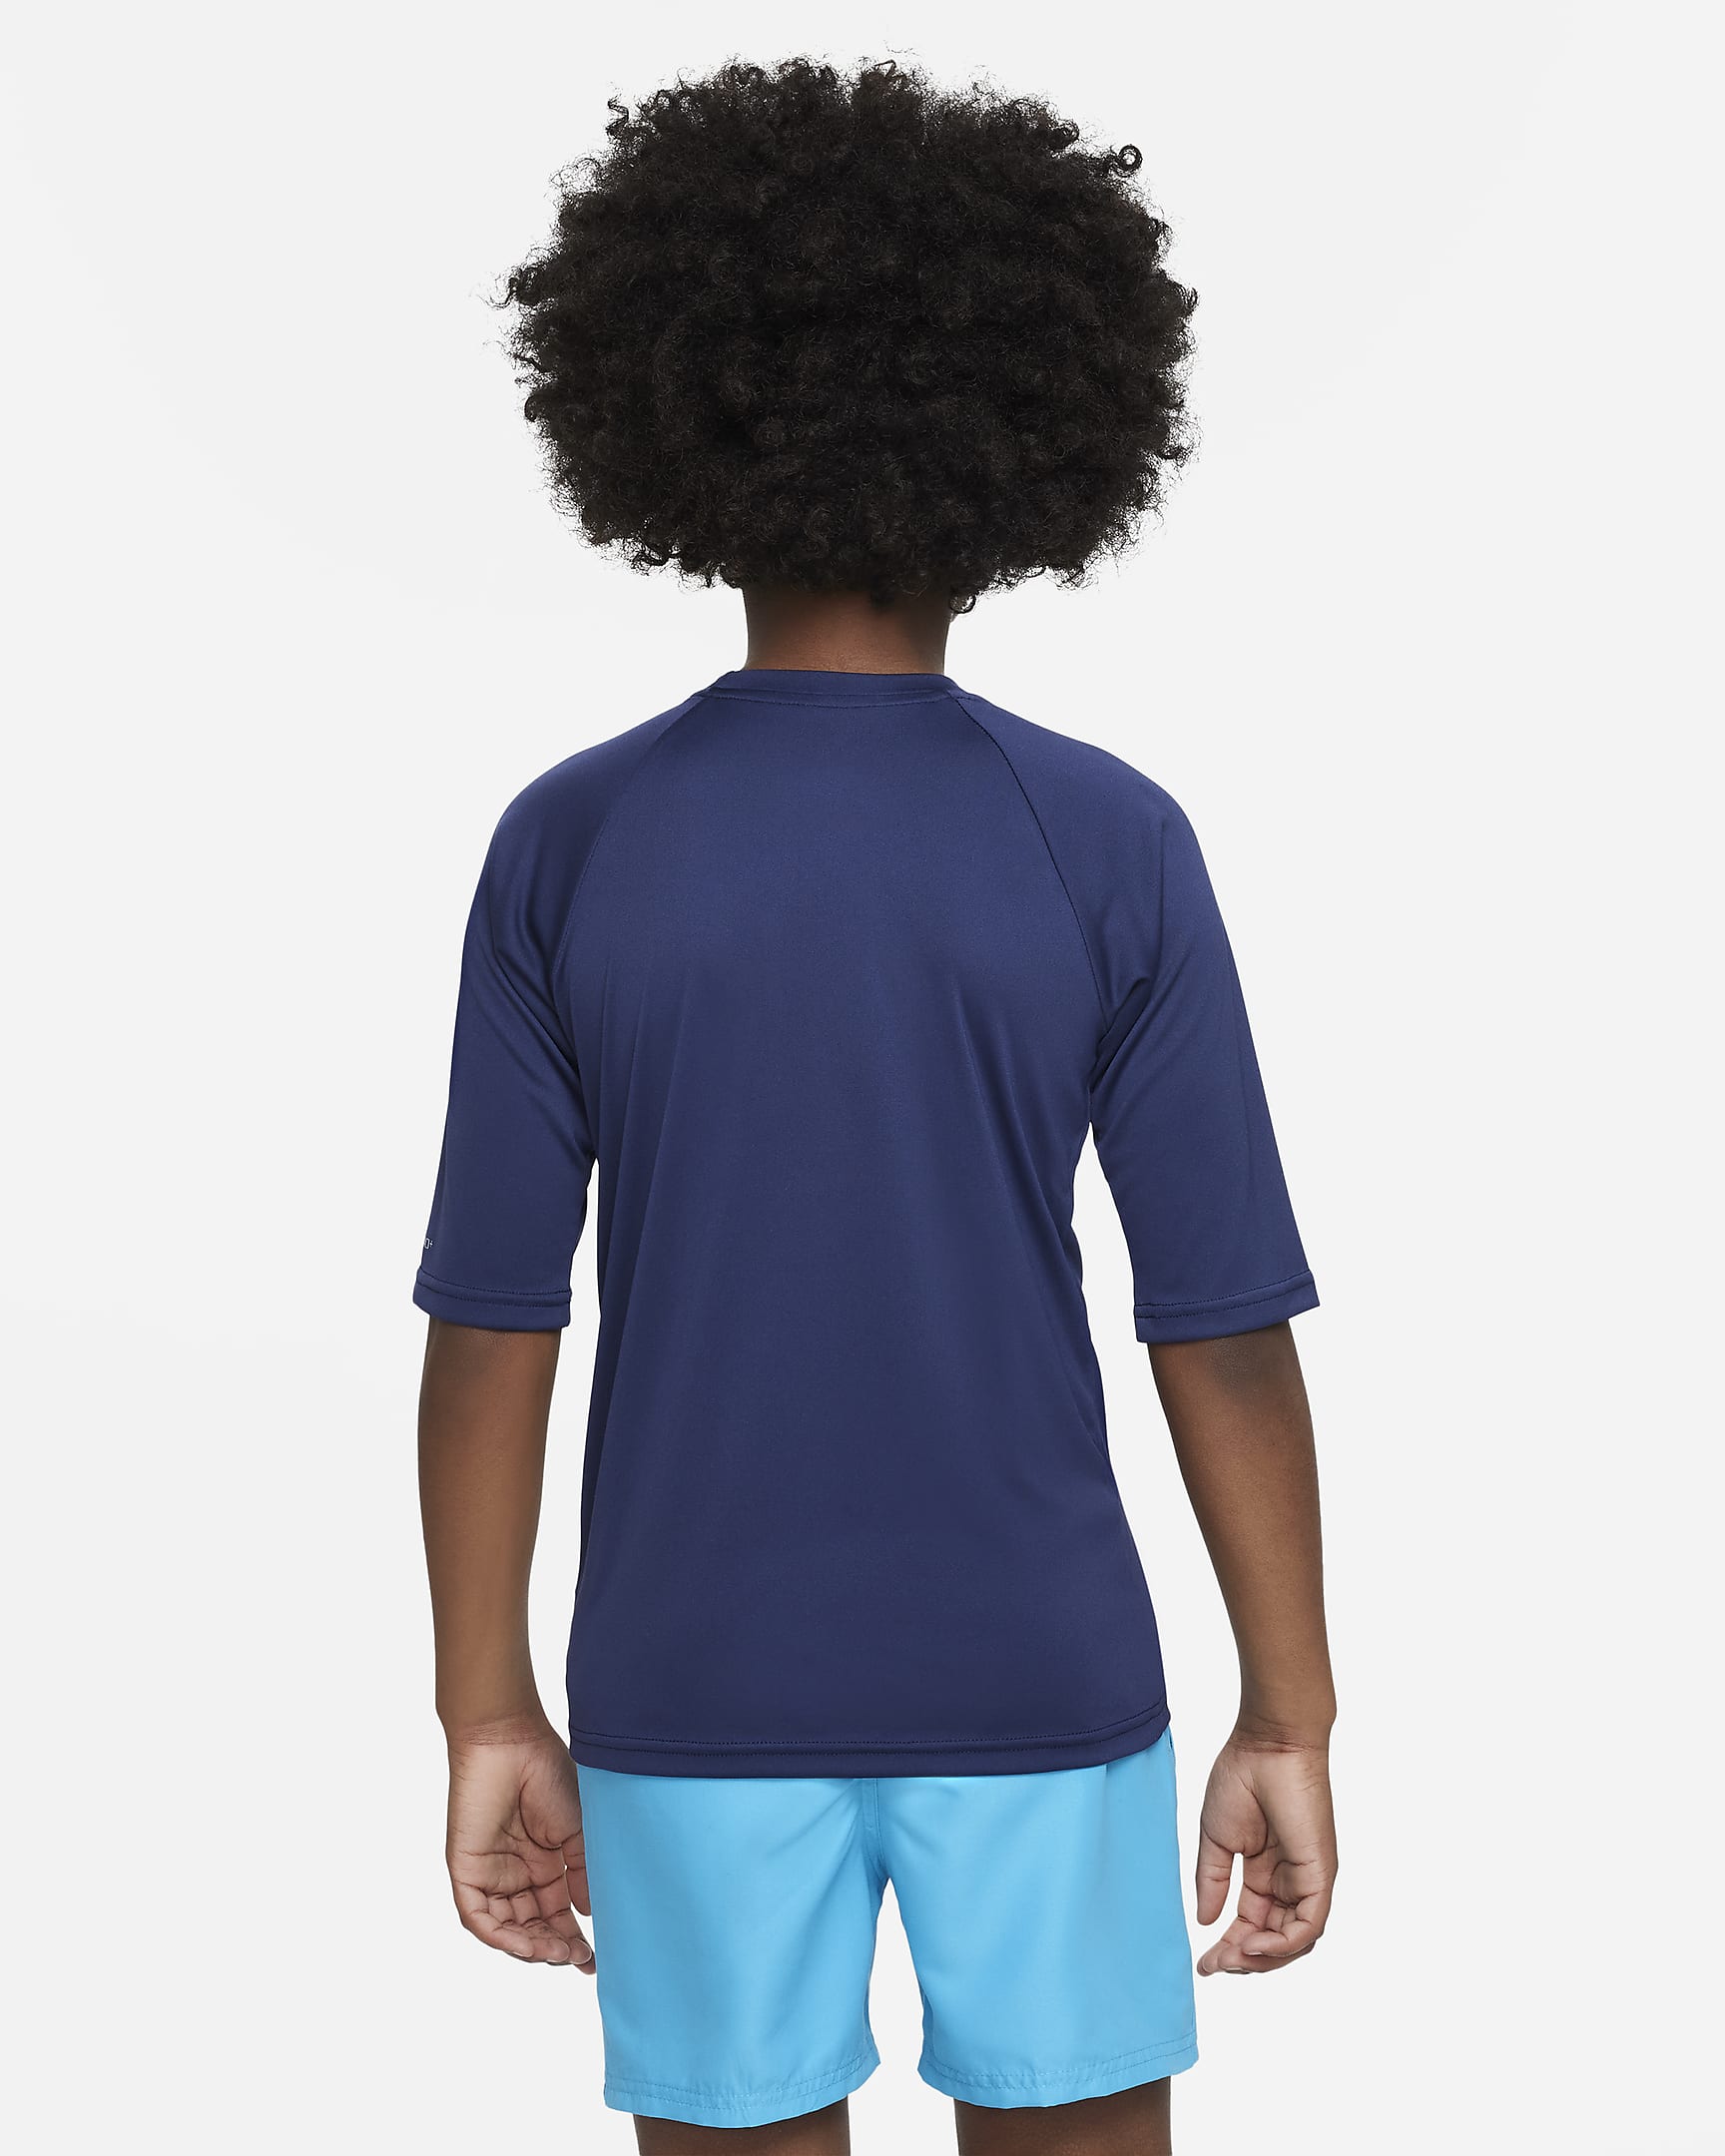 Nike Dri-FIT Big Kids' (Boys') Short-Sleeve Hydroguard. Nike.com